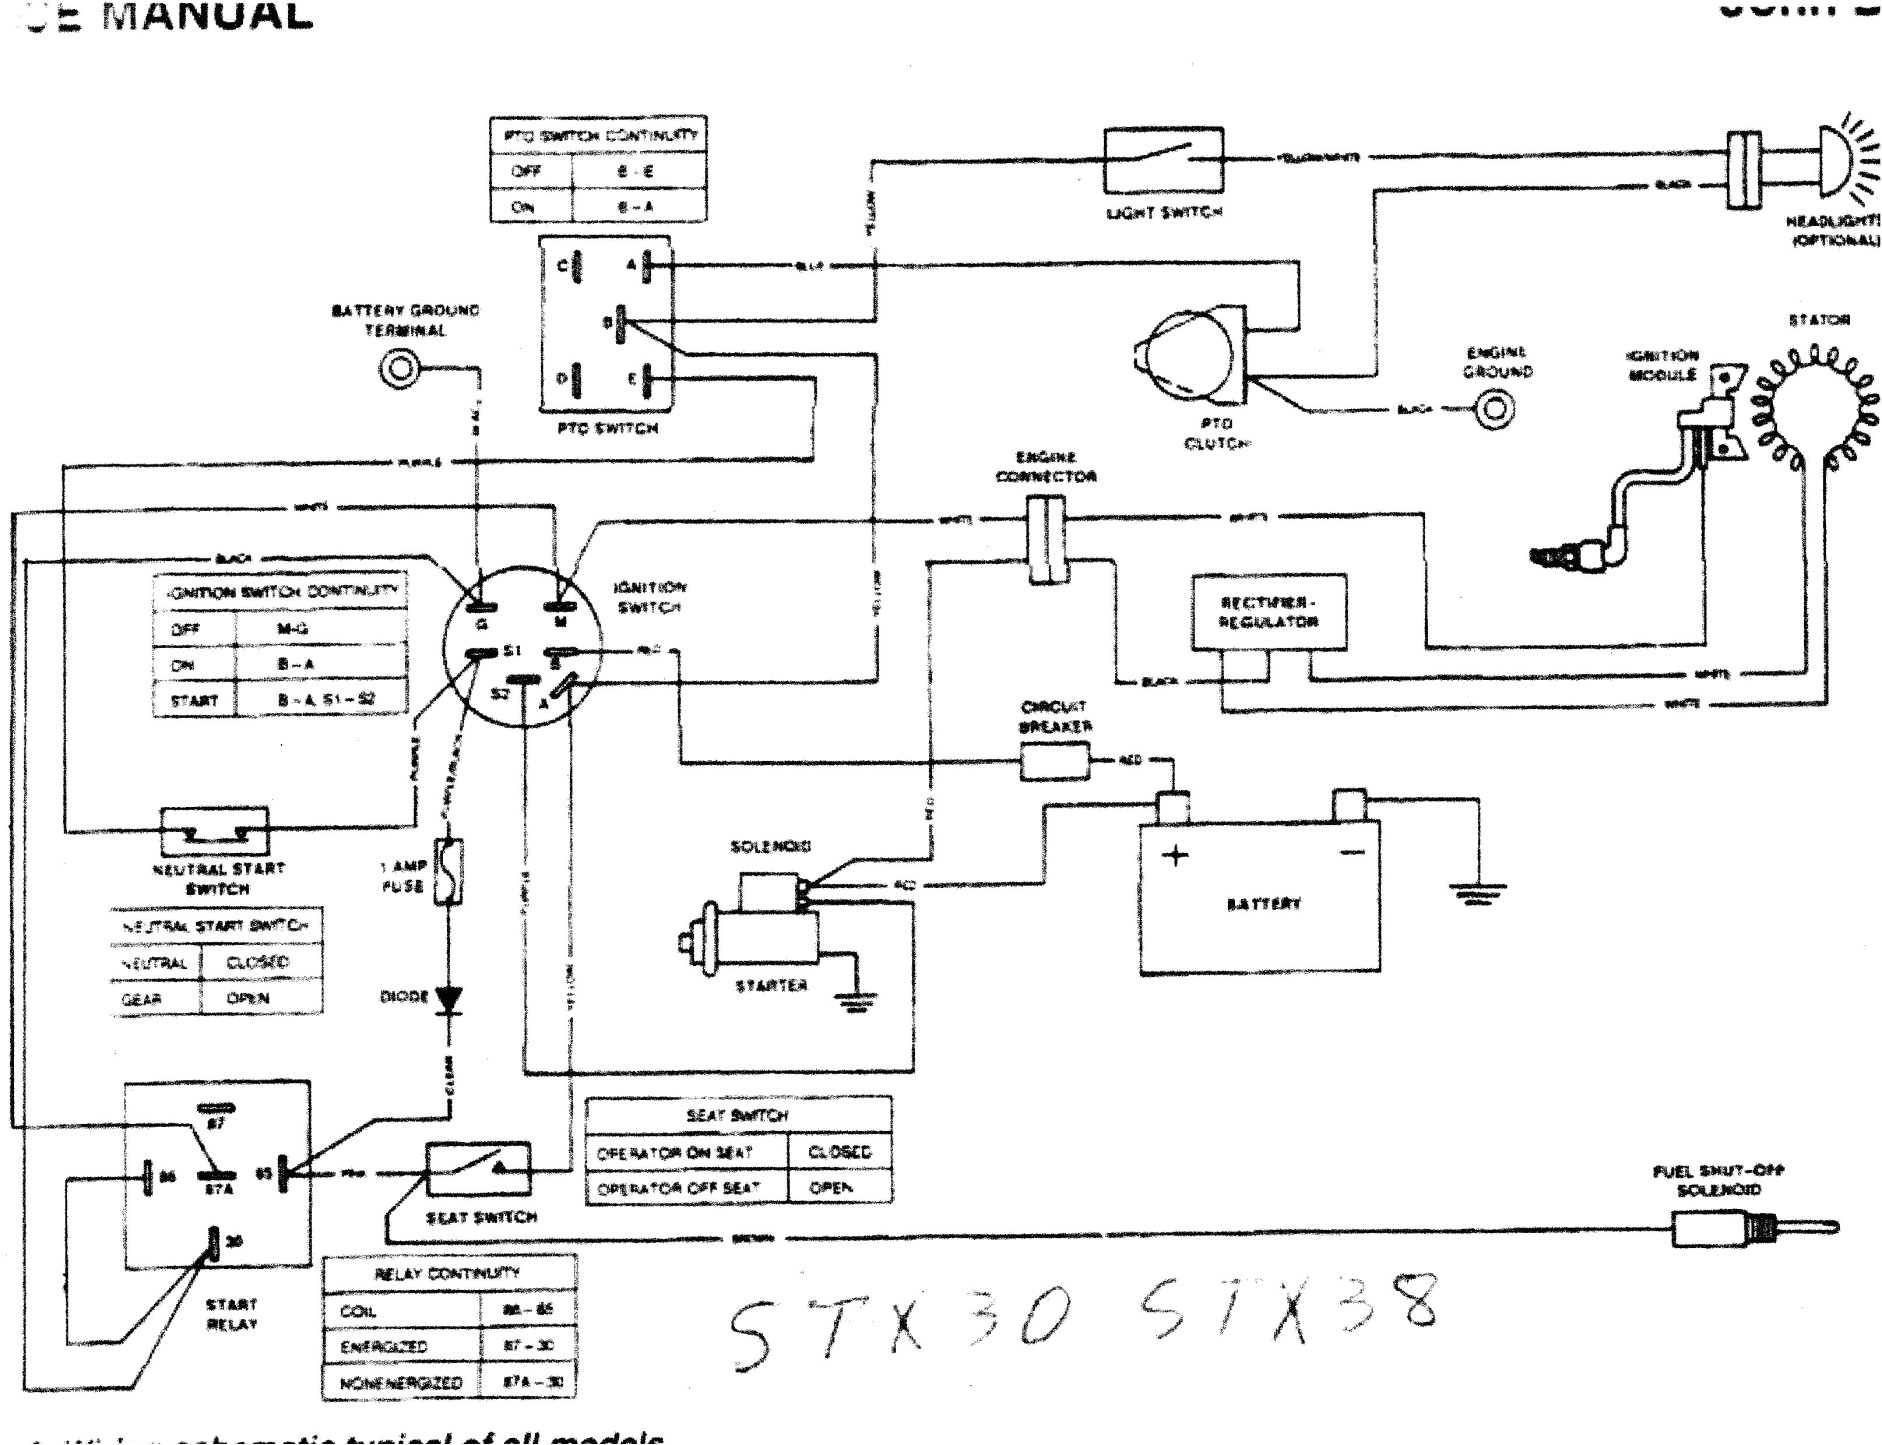 wiring diagram for john deere 4020 wiring diagram paperwiring diagram john deere 4020 tractor wiring diagram